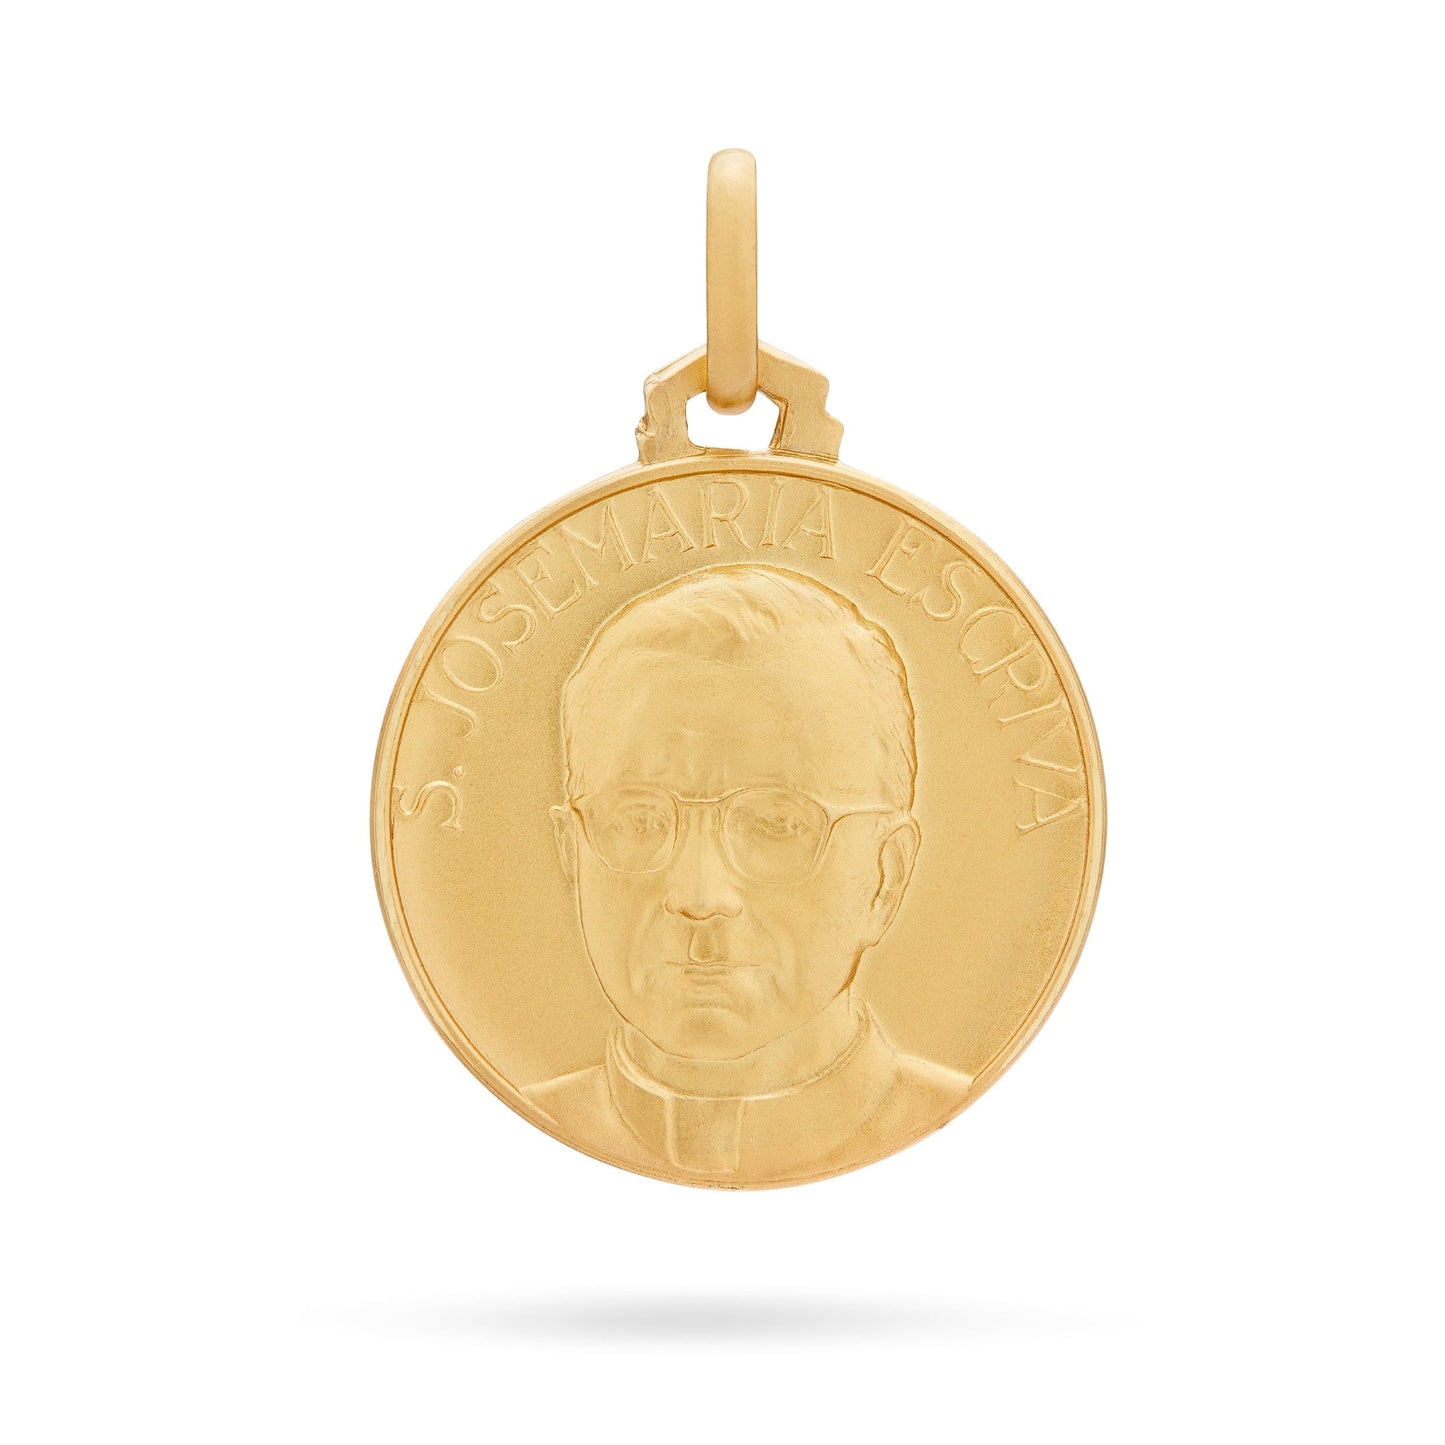 MONDO CATTOLICO 18 mm (0.70 in) Gold medal of Saint Joseph M. Escrivá de Balaguer